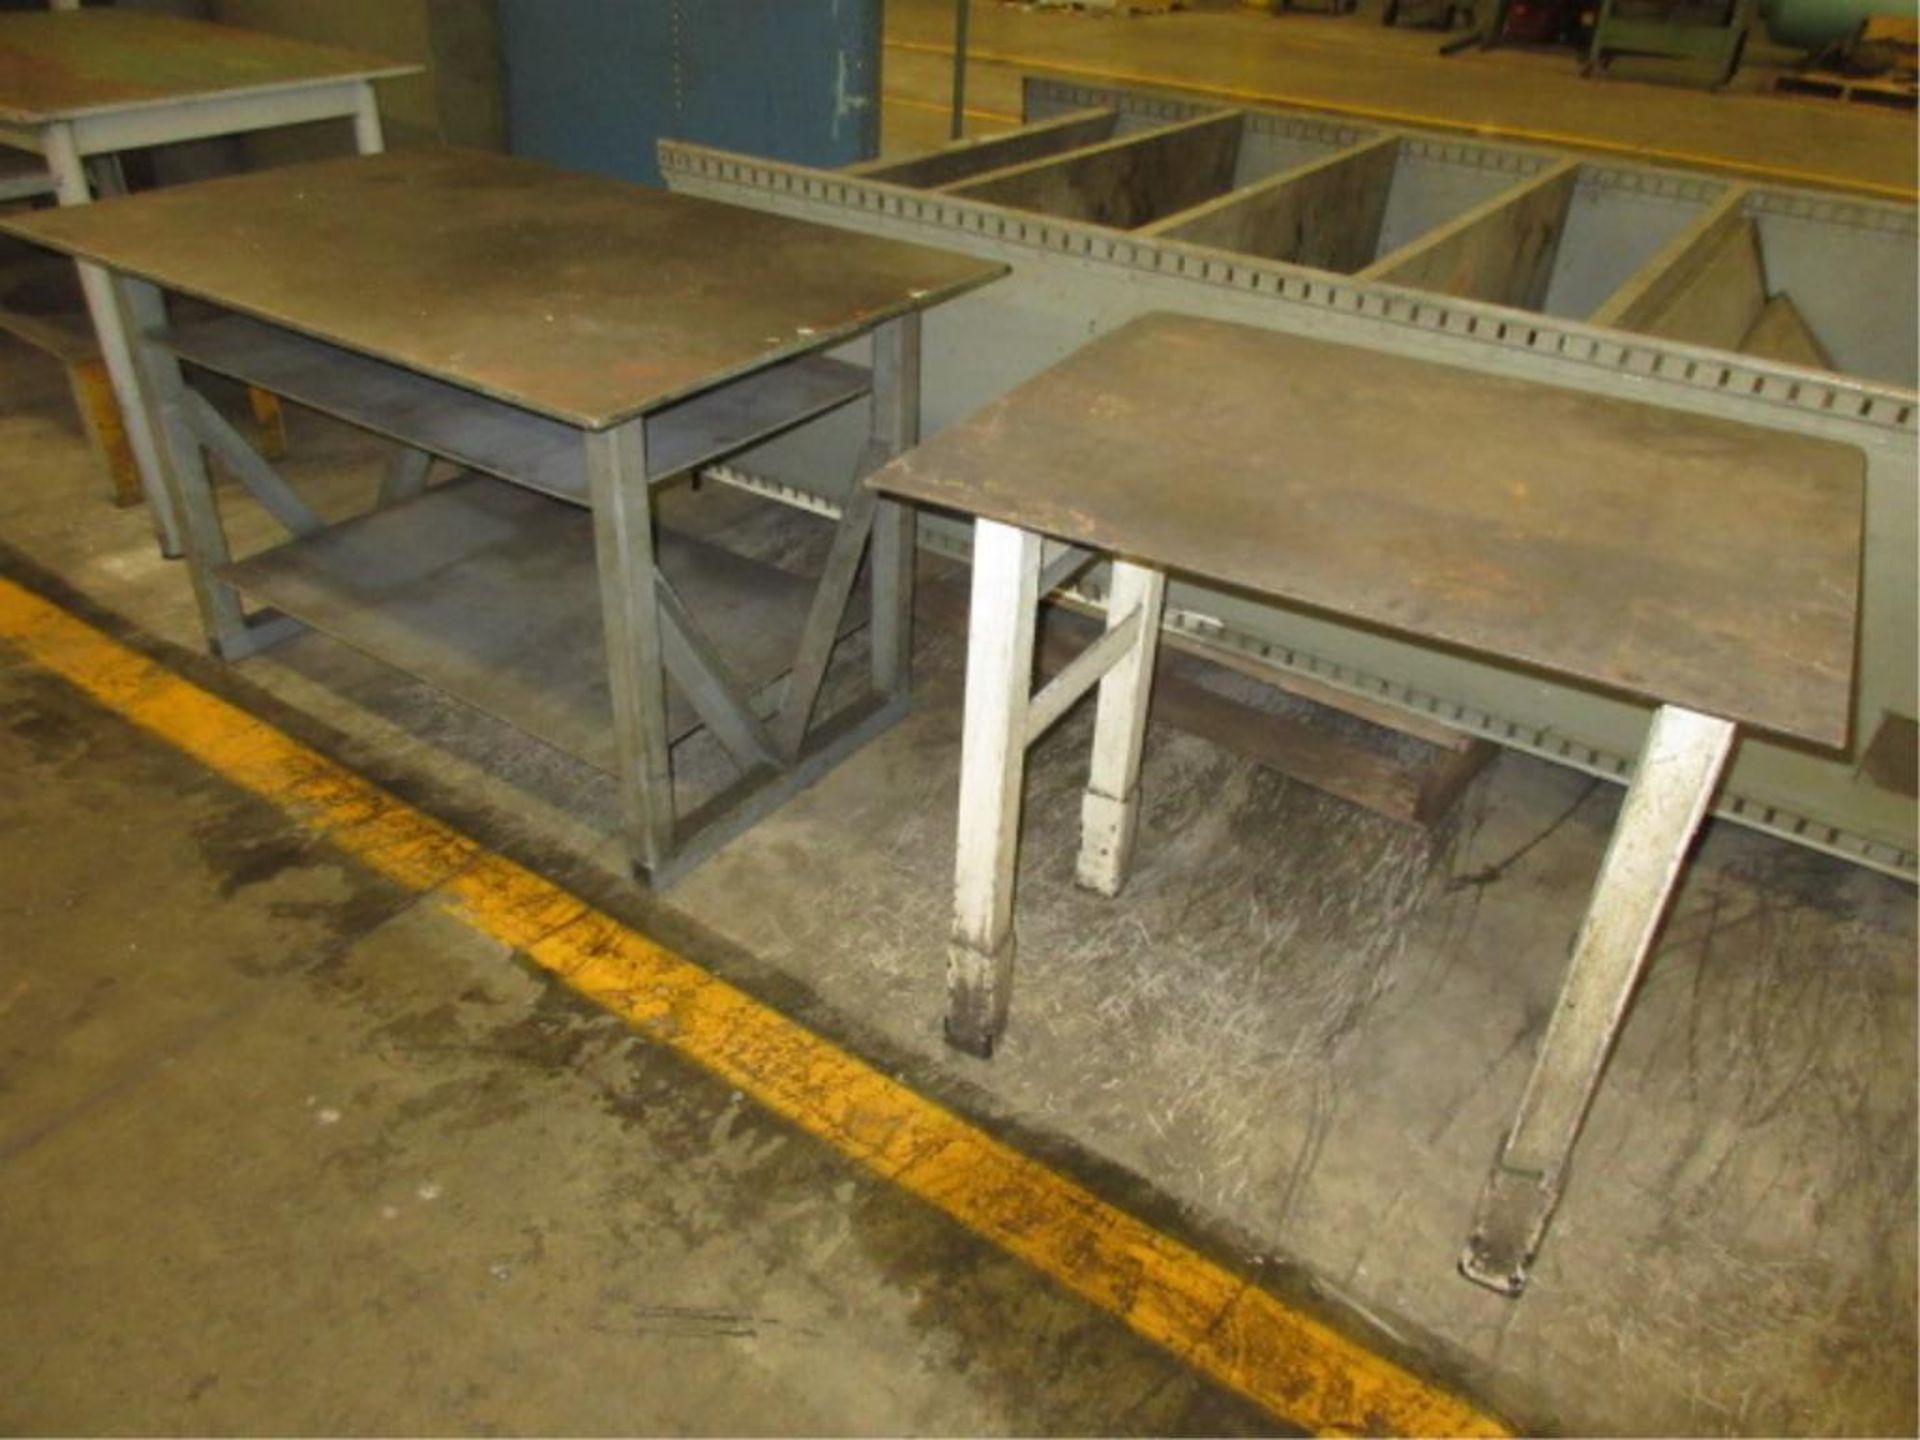 Shop Tables. Lot (7pcs) Heavy Duty Steel Shop Tables. HIT# 2179043. Loc: main floor. Asset Located - Image 4 of 5